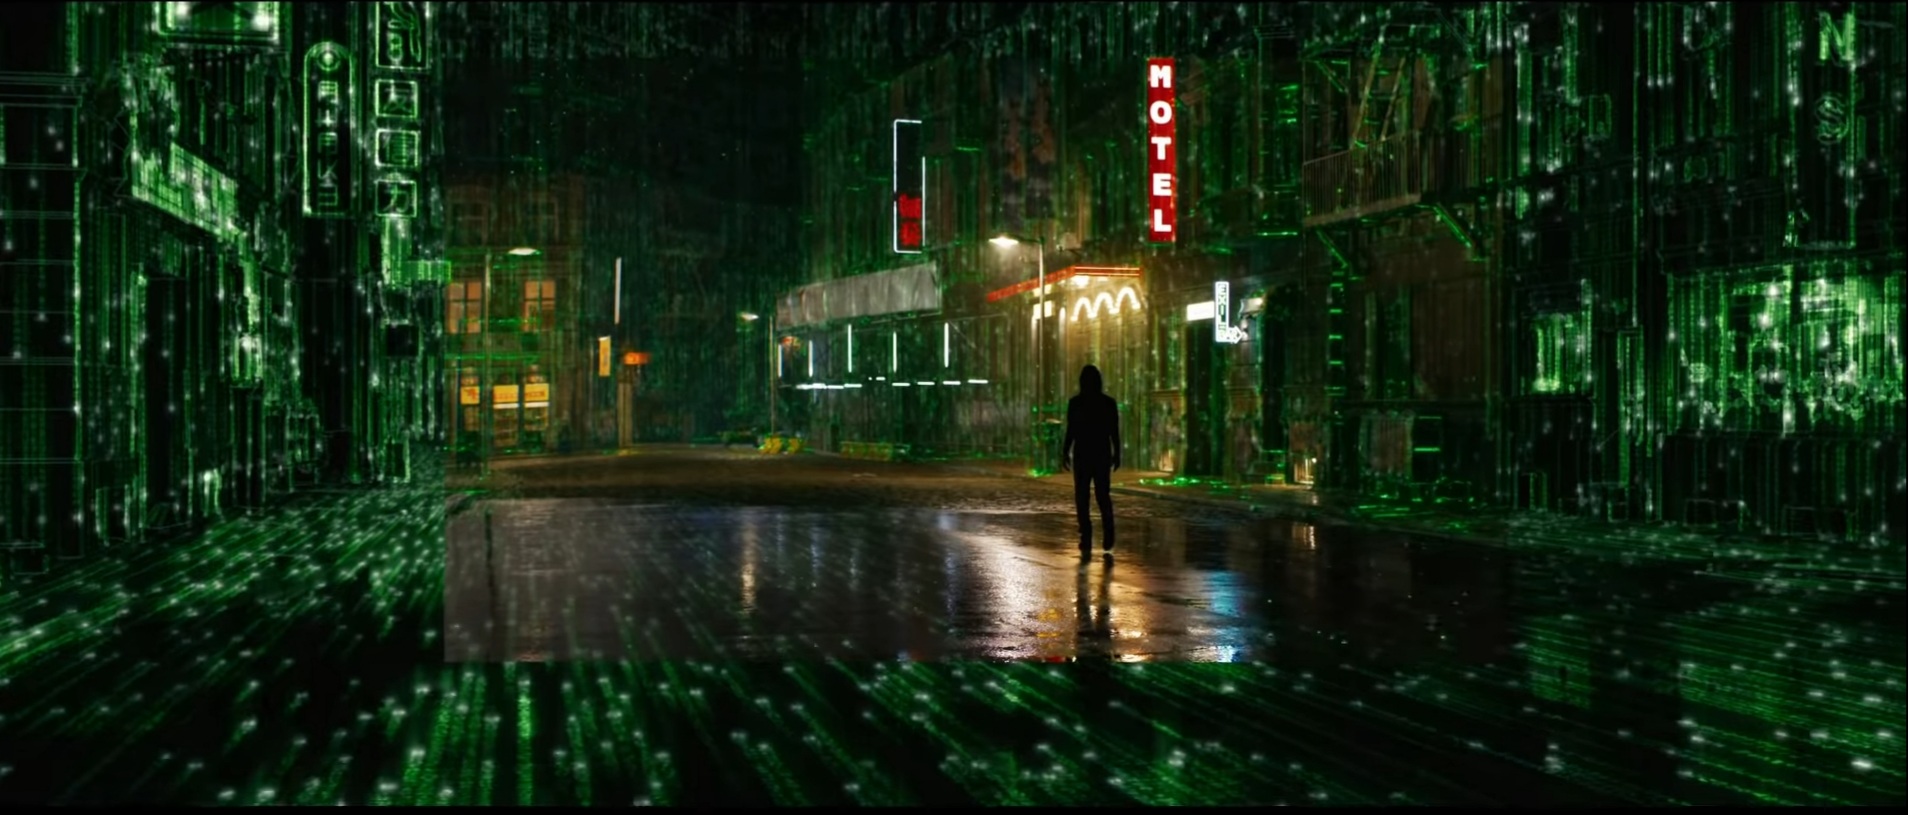 Neo Returns In New ‘Matrix Resurrections’ Trailer!